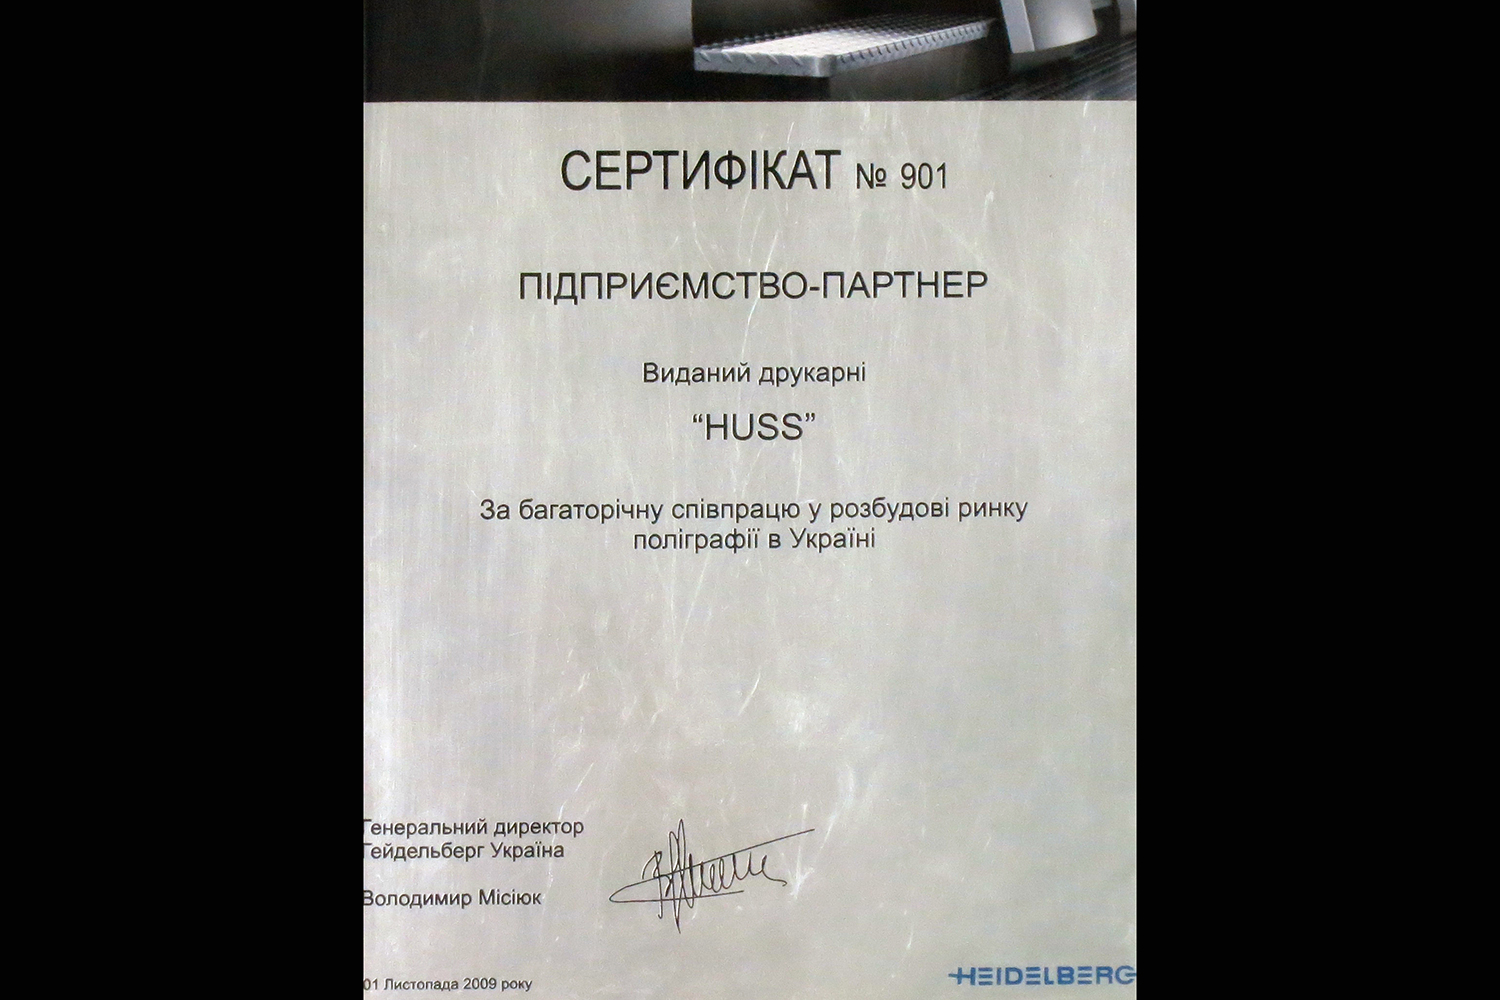 Heidelberg sertifikat